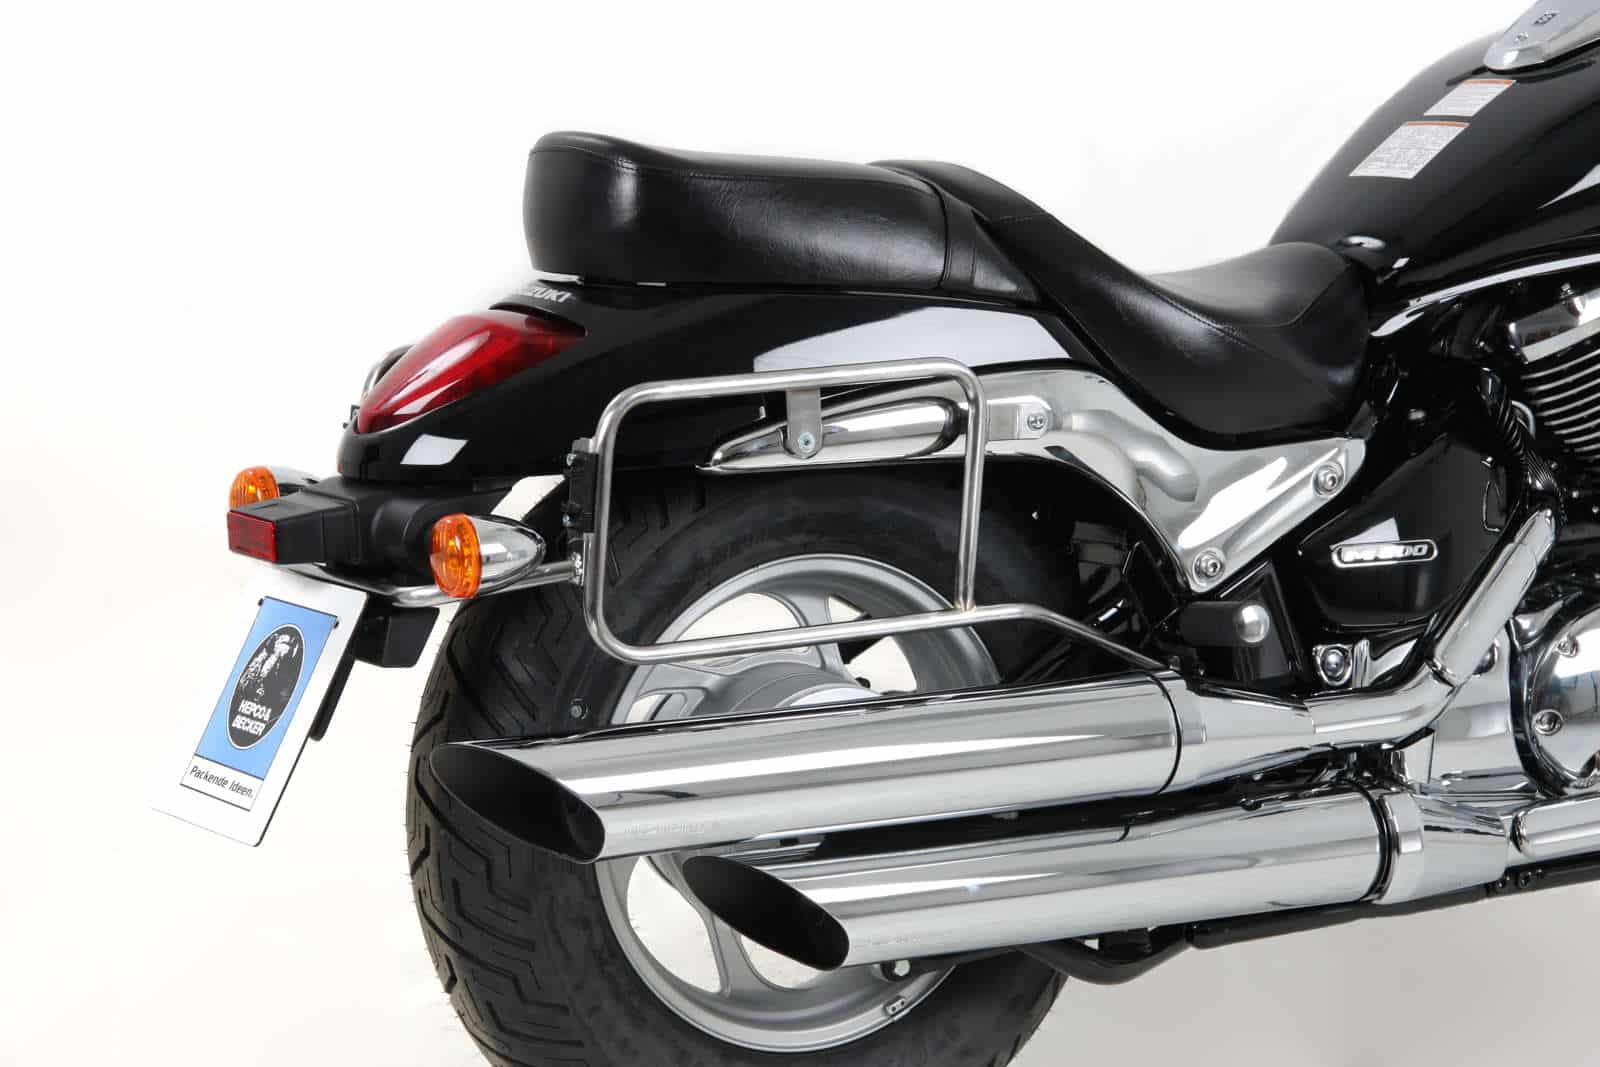 Sidecarrier permanent mounted chrome for Suzuki M 800 Intruder (2009-)